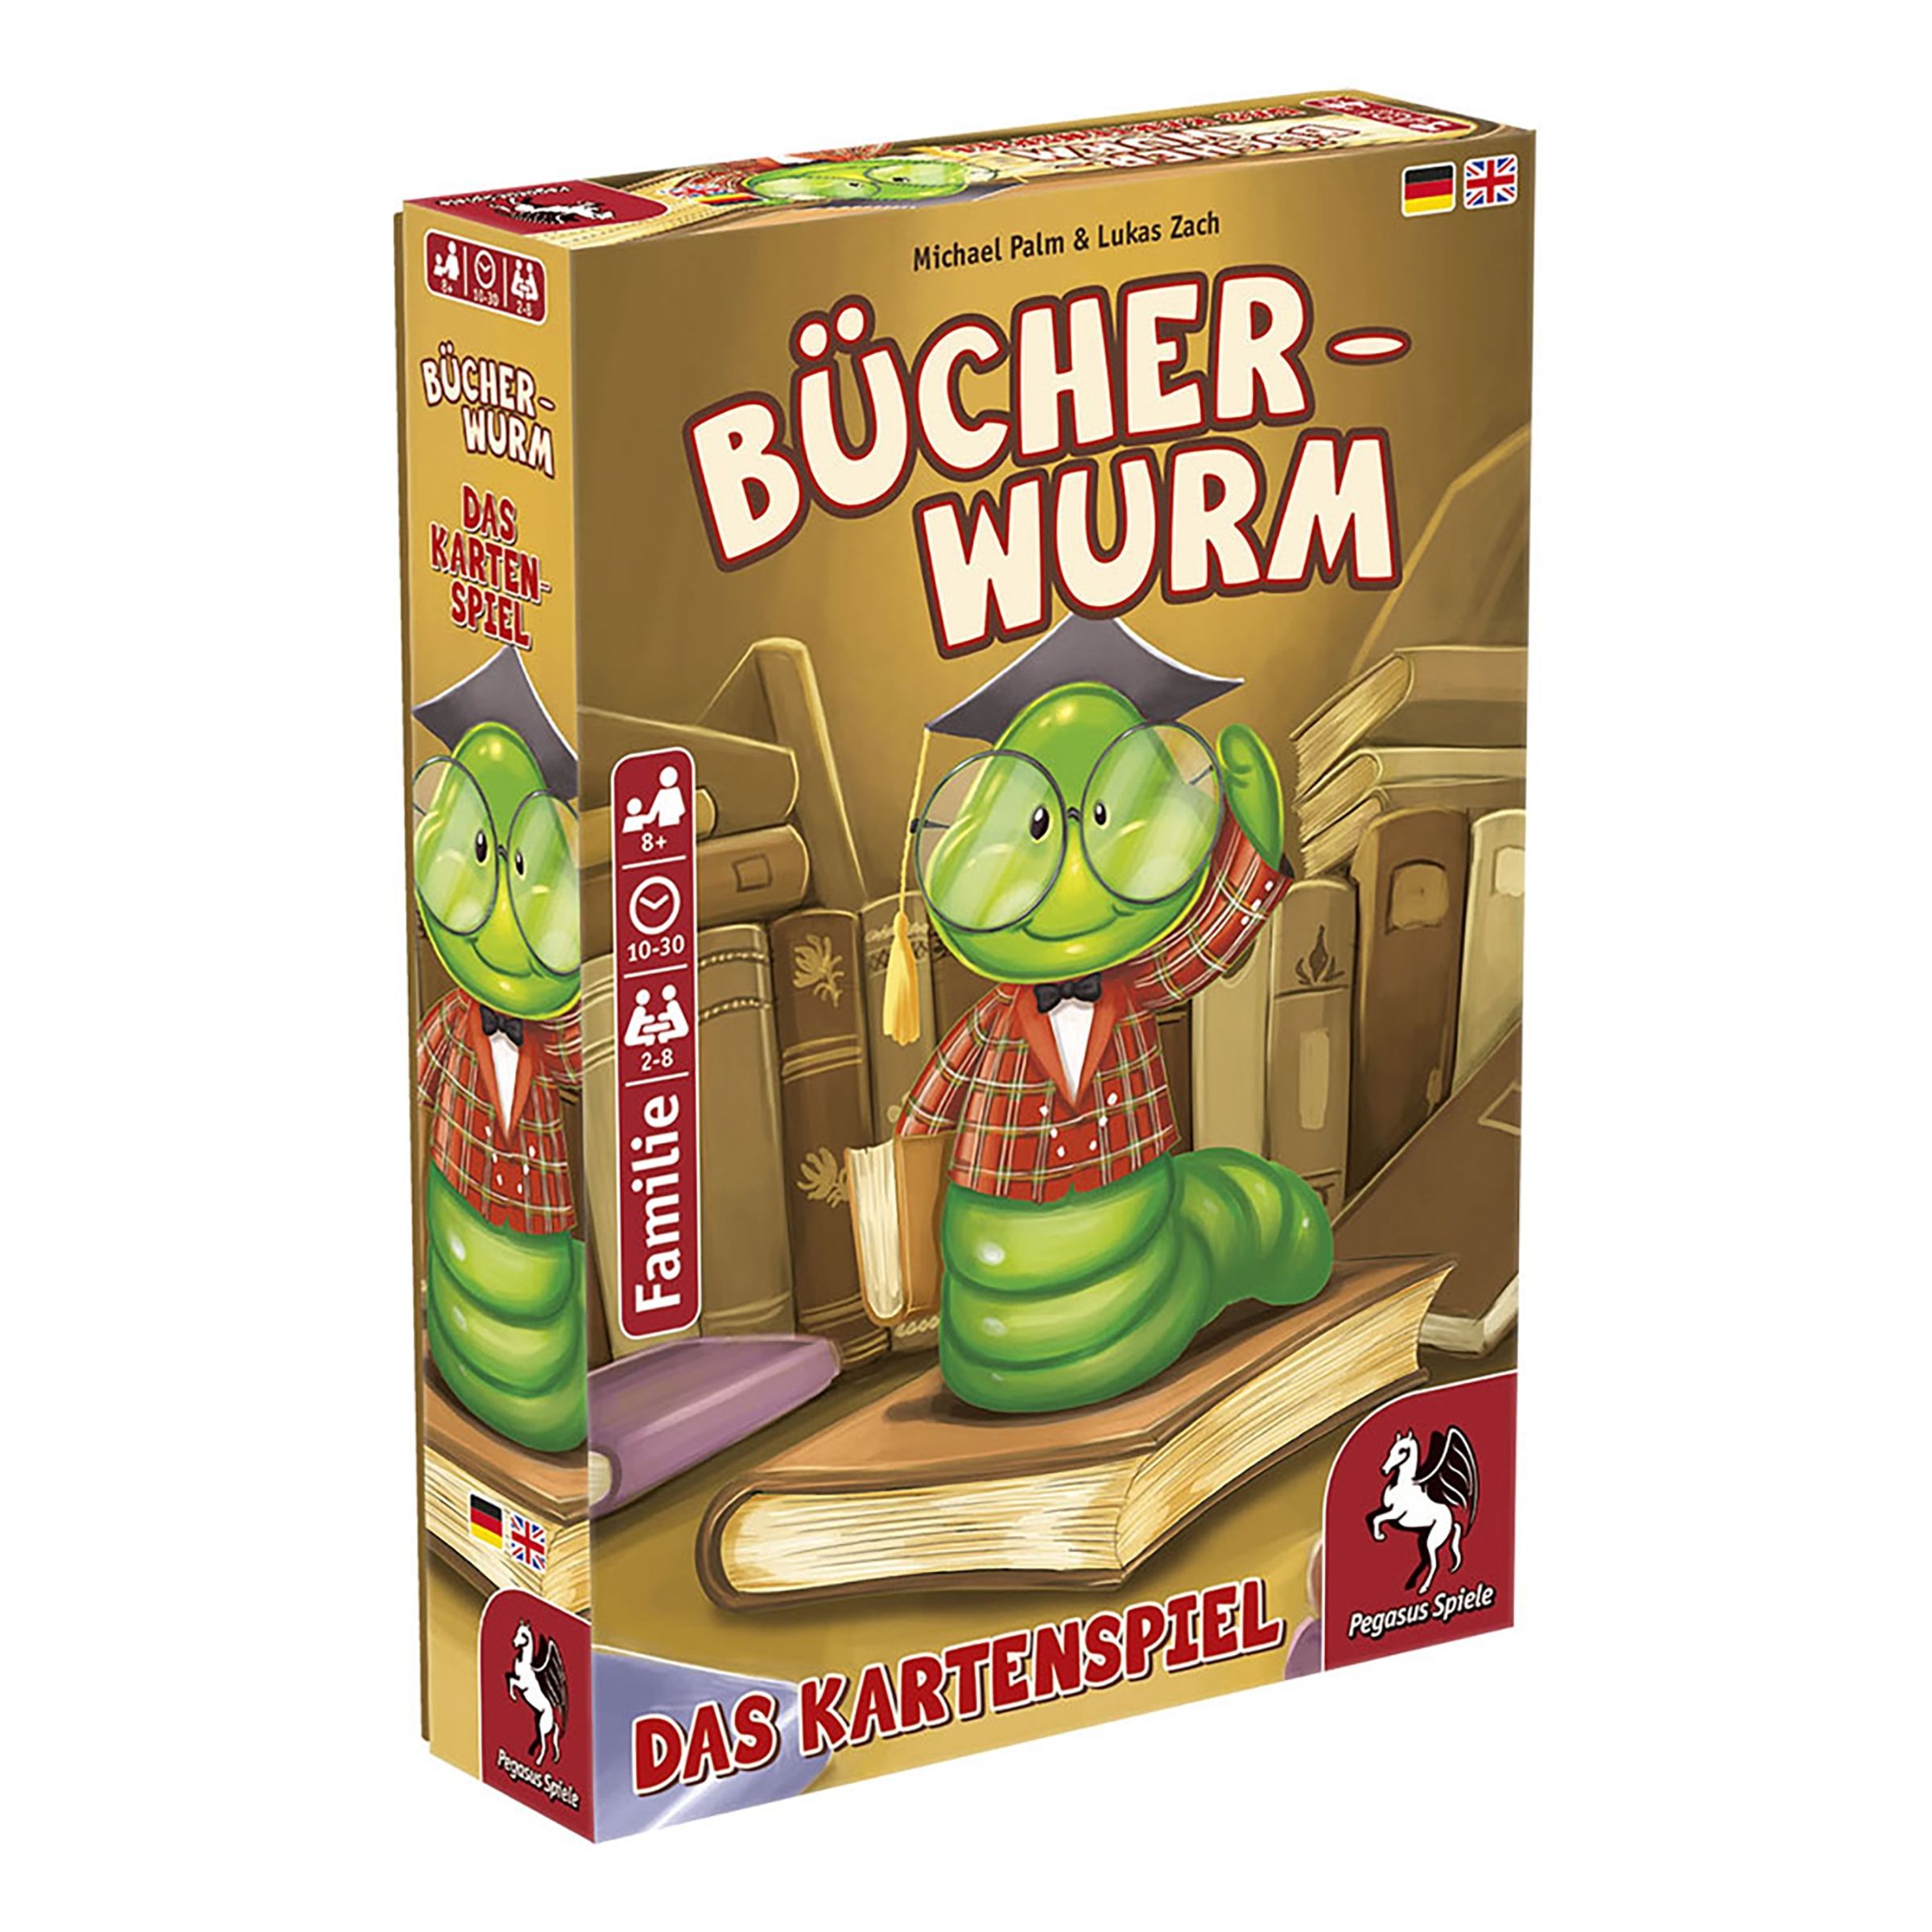 Bookworm / Bu?cherwurm (EN)